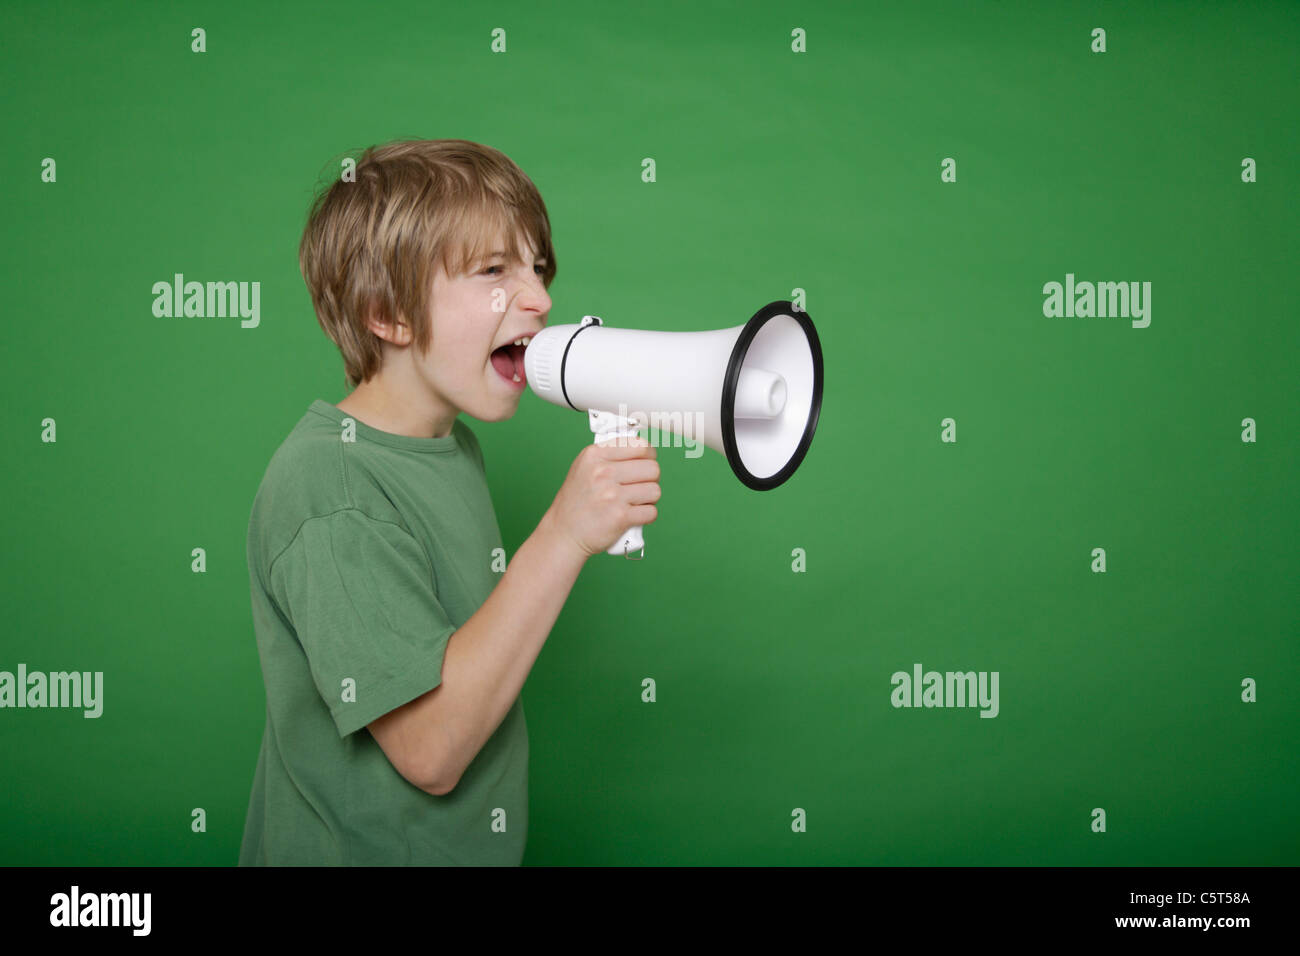 Boy screaming in megaphone against green background Stock Photo